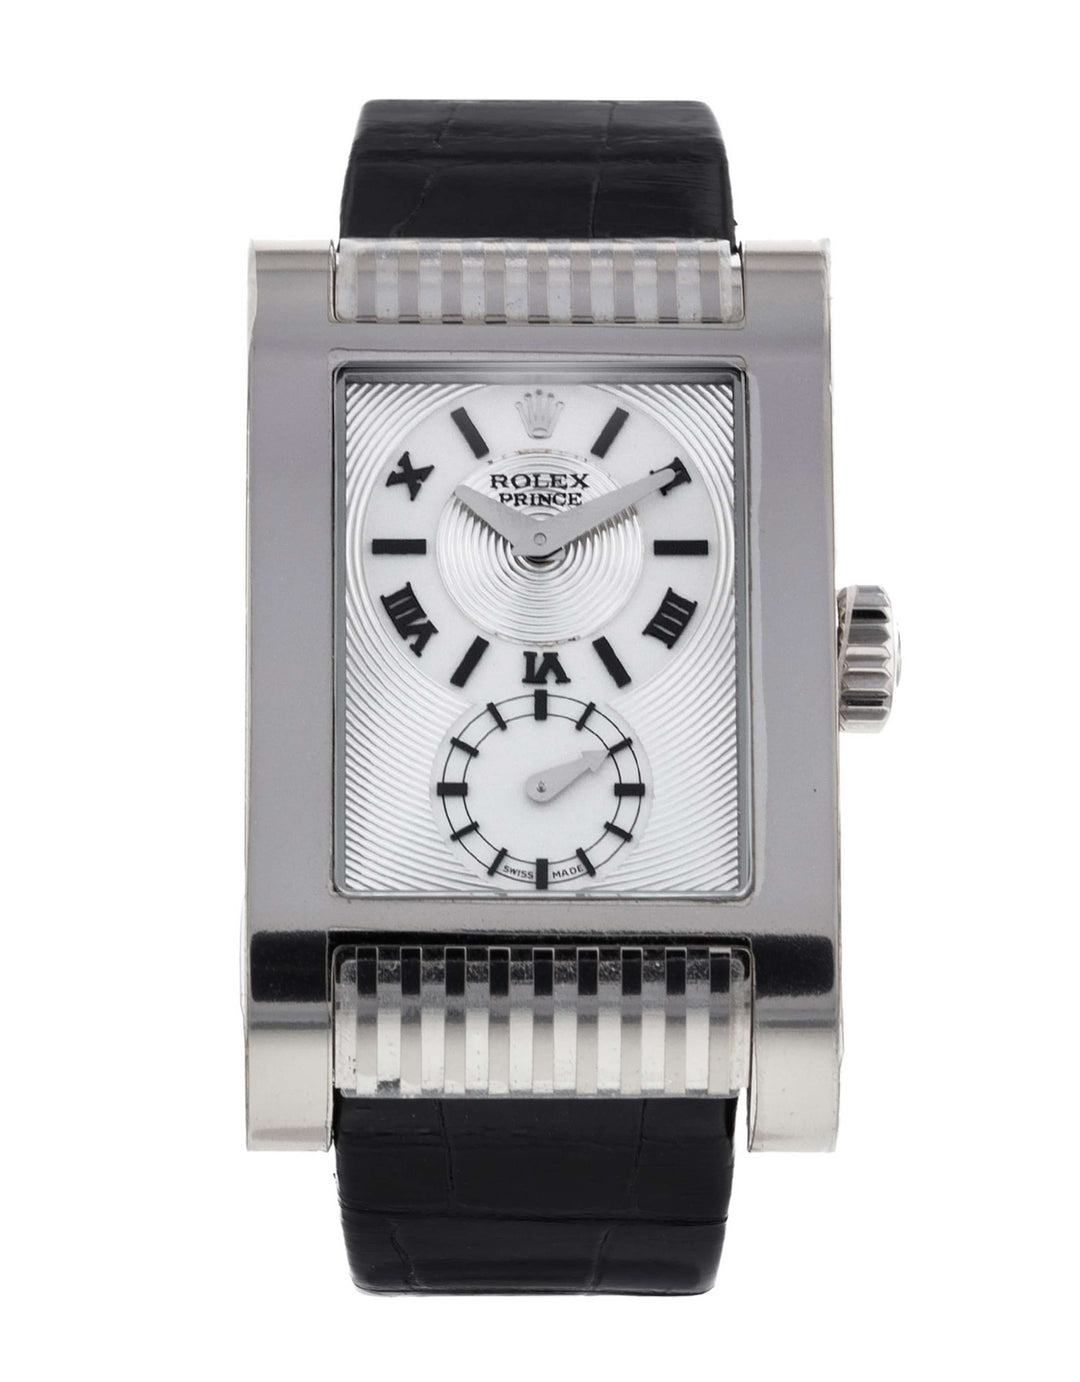 Rolex Cellini Prince Silver-tone Dial Men's Watch